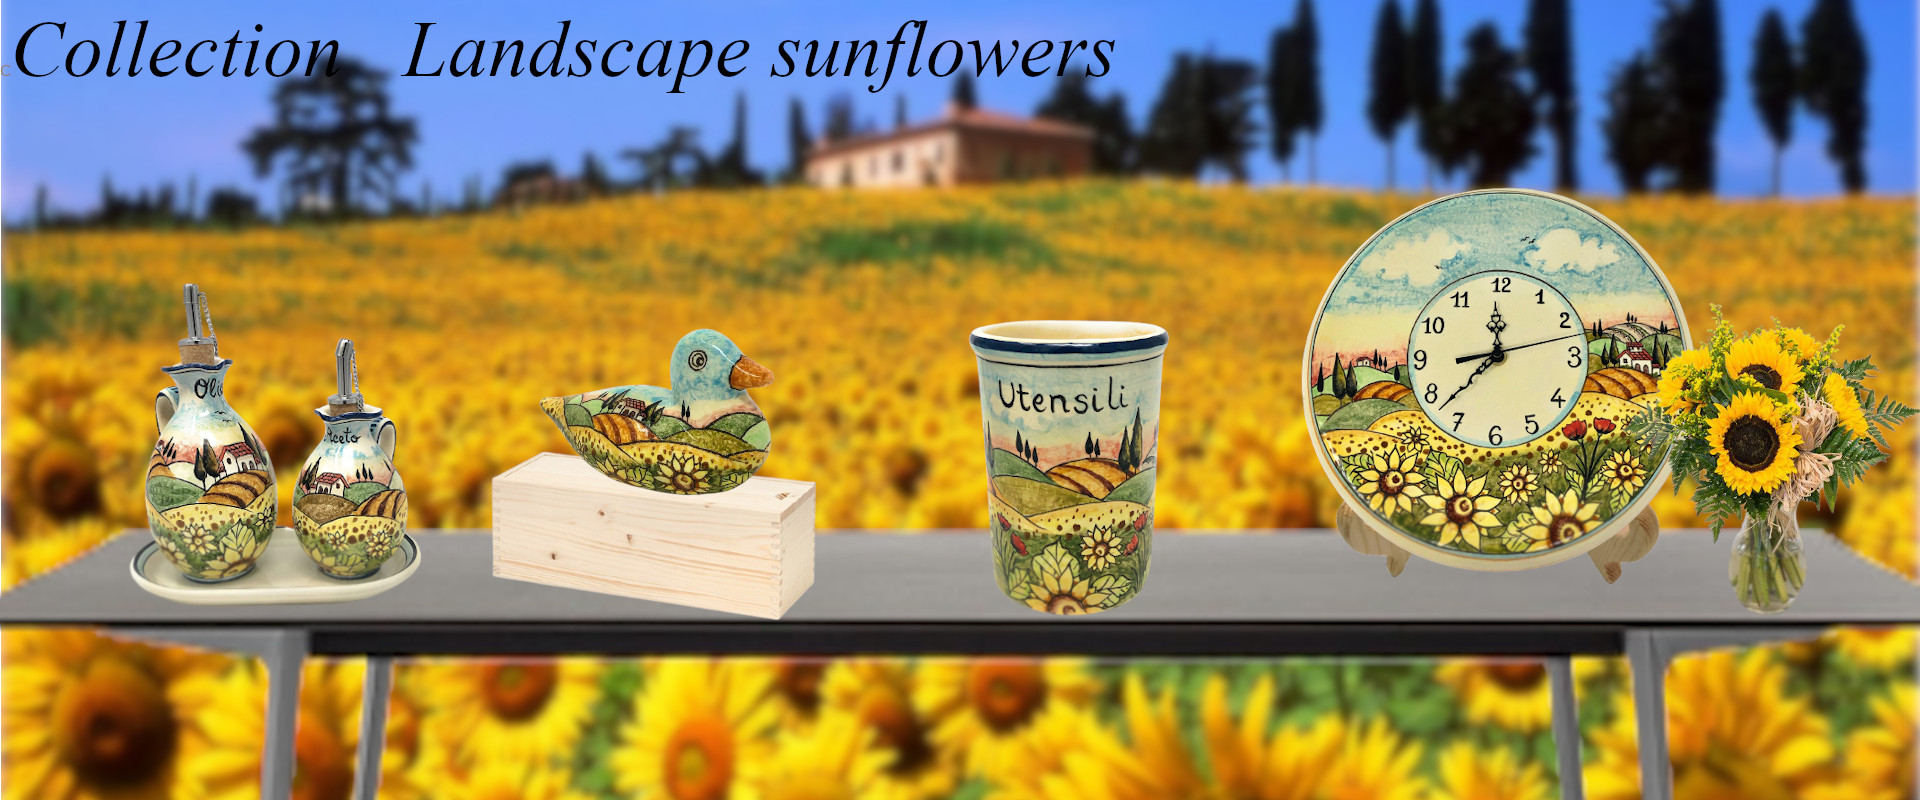 landscape sunflowers